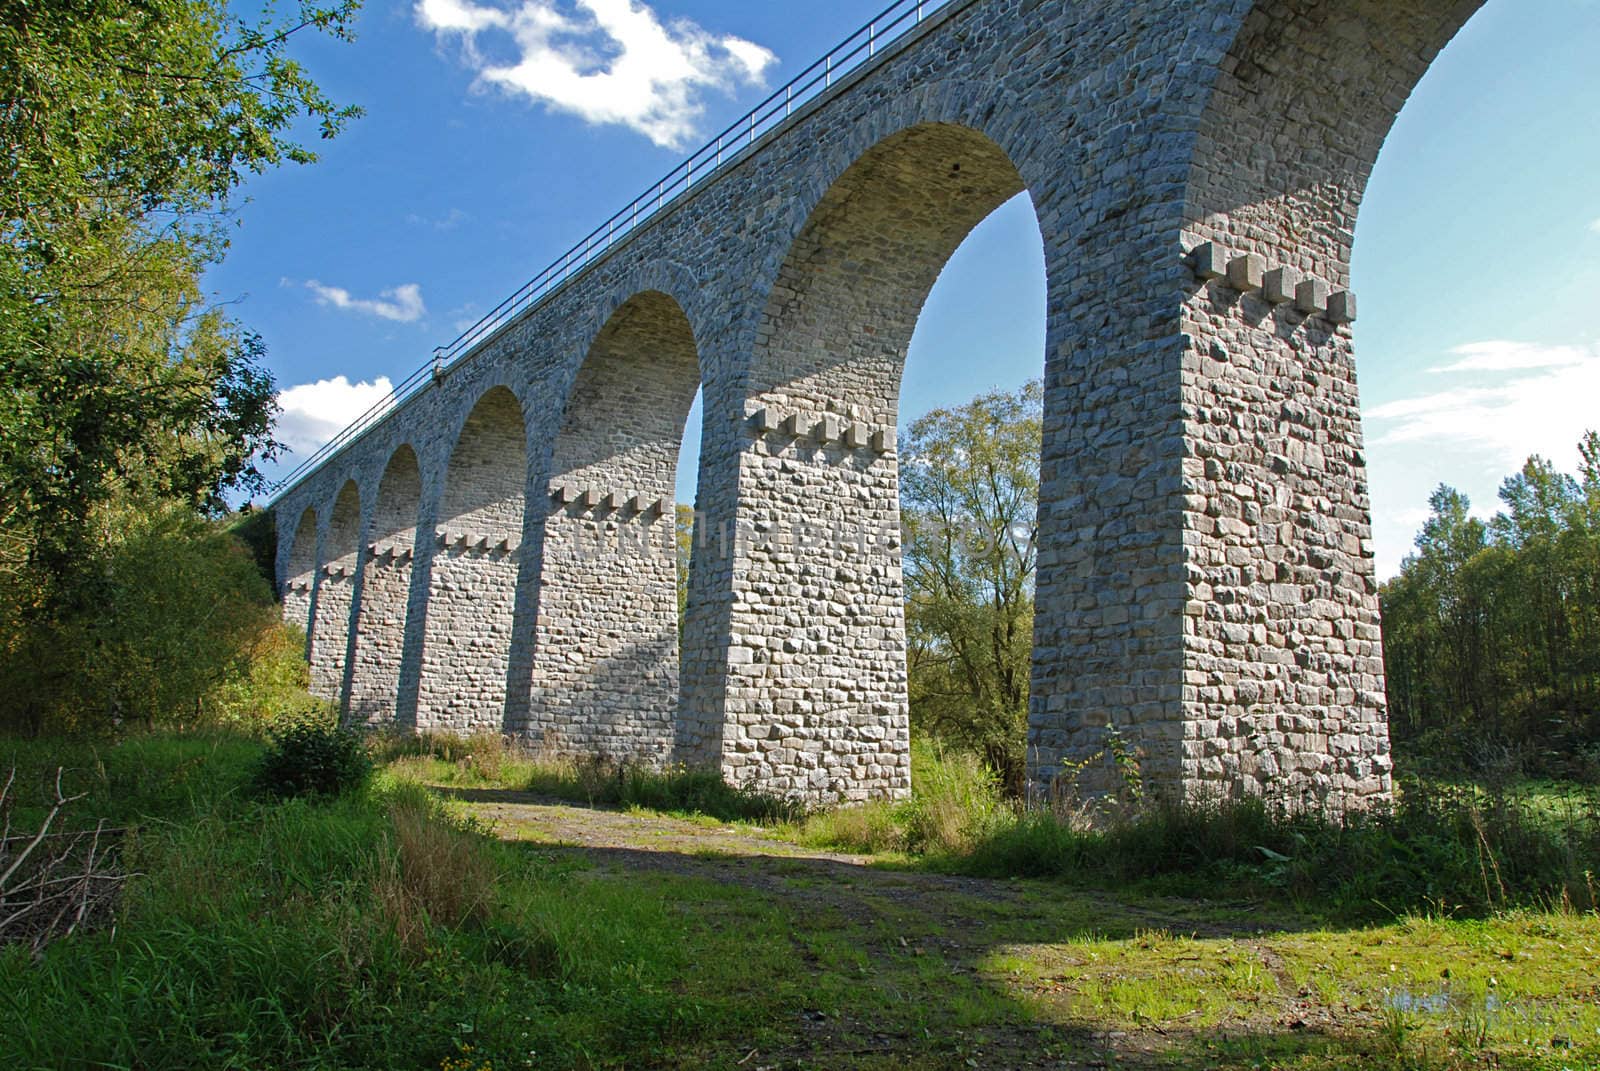 Old stone railway bridge with many bows